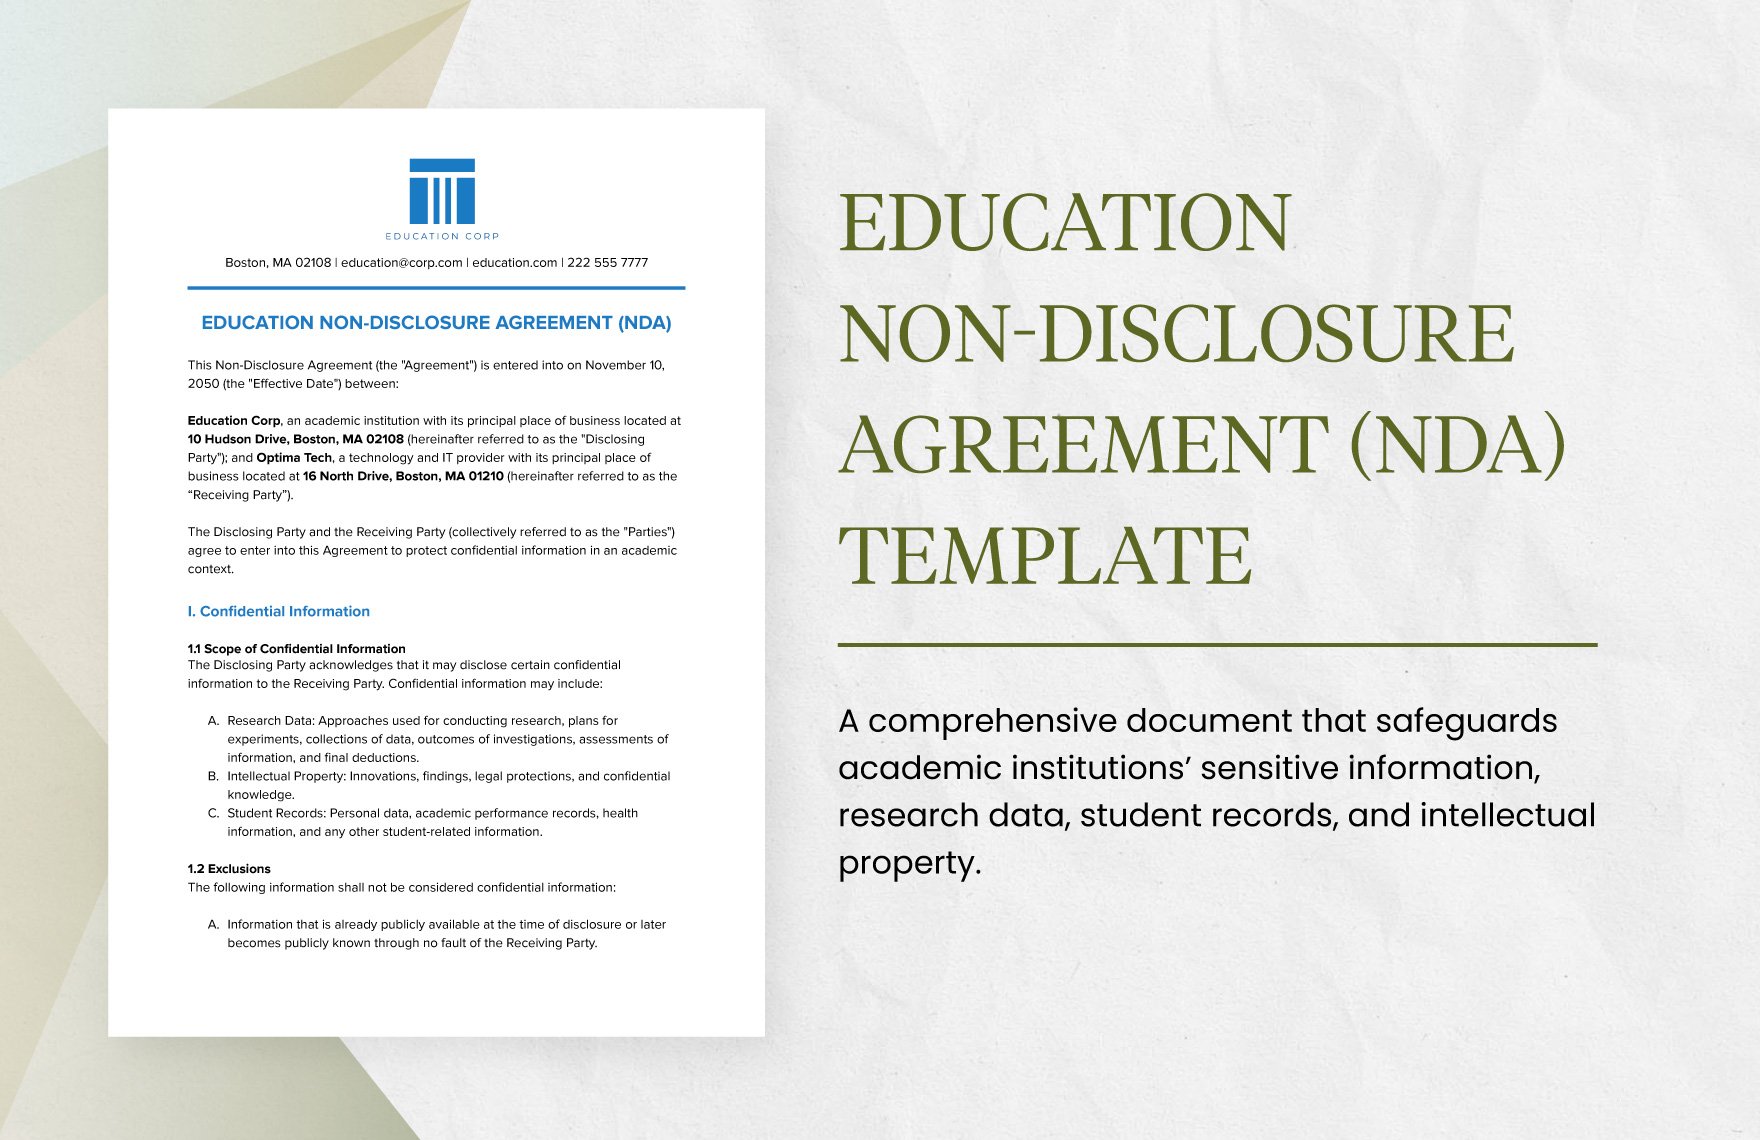 Education Non-Disclosure Agreement (NDA) Template